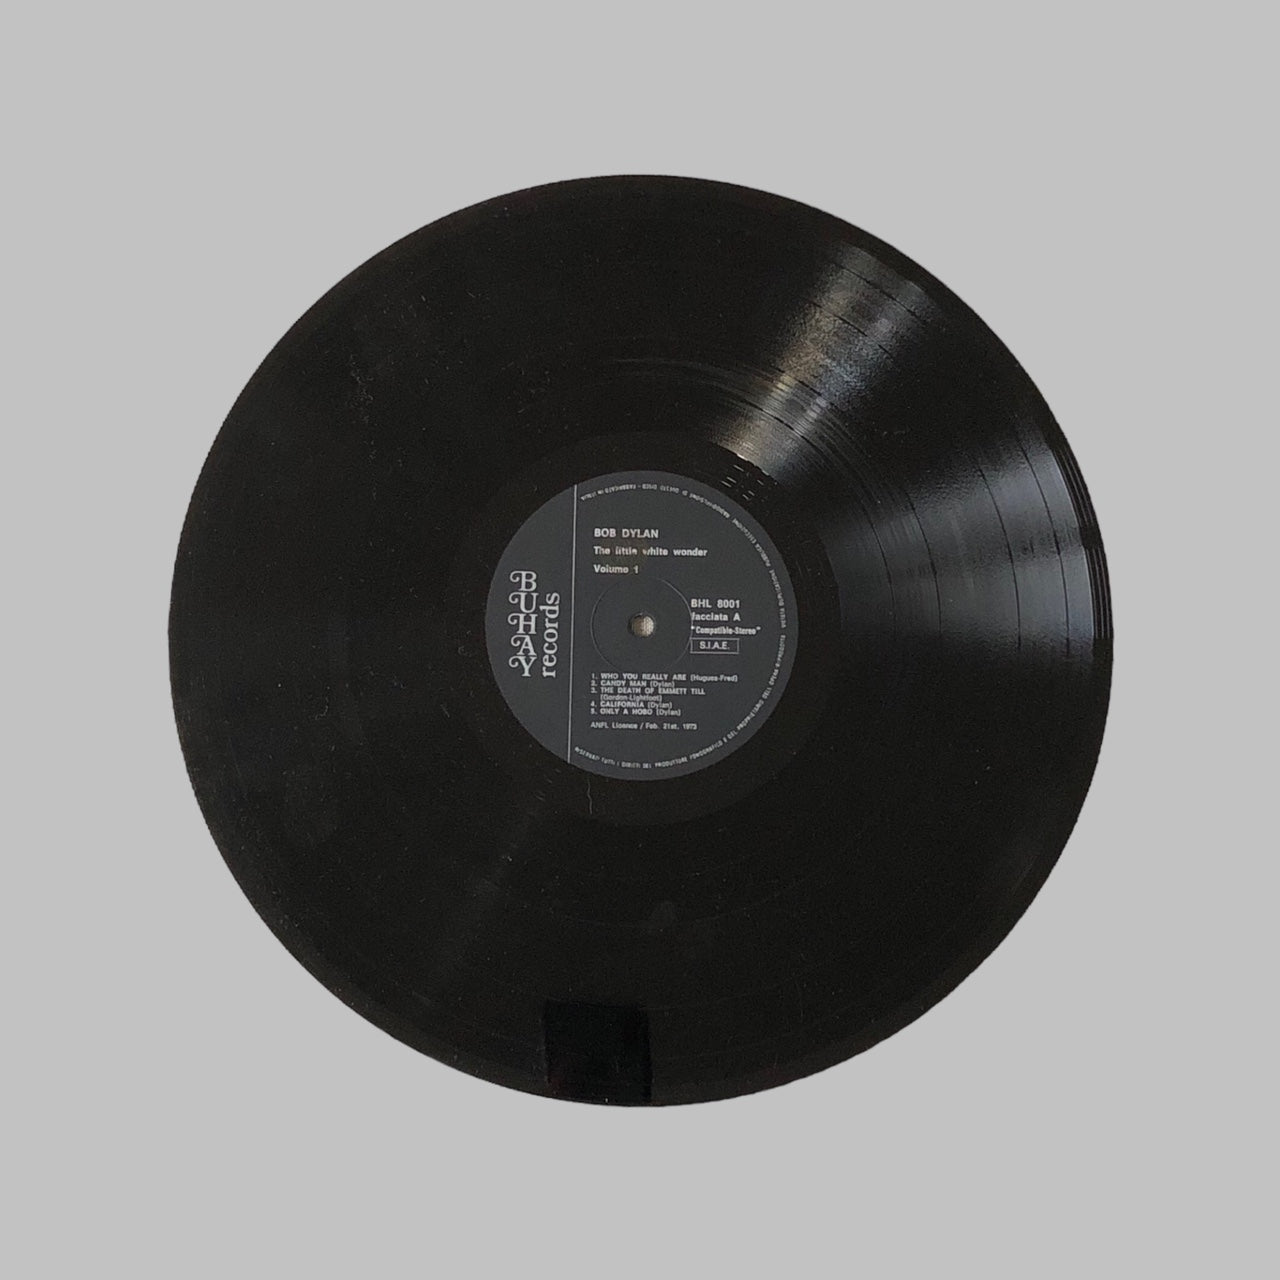 LP Vinyl - Bob Dylan - The Little White Wonder Vol. 1.